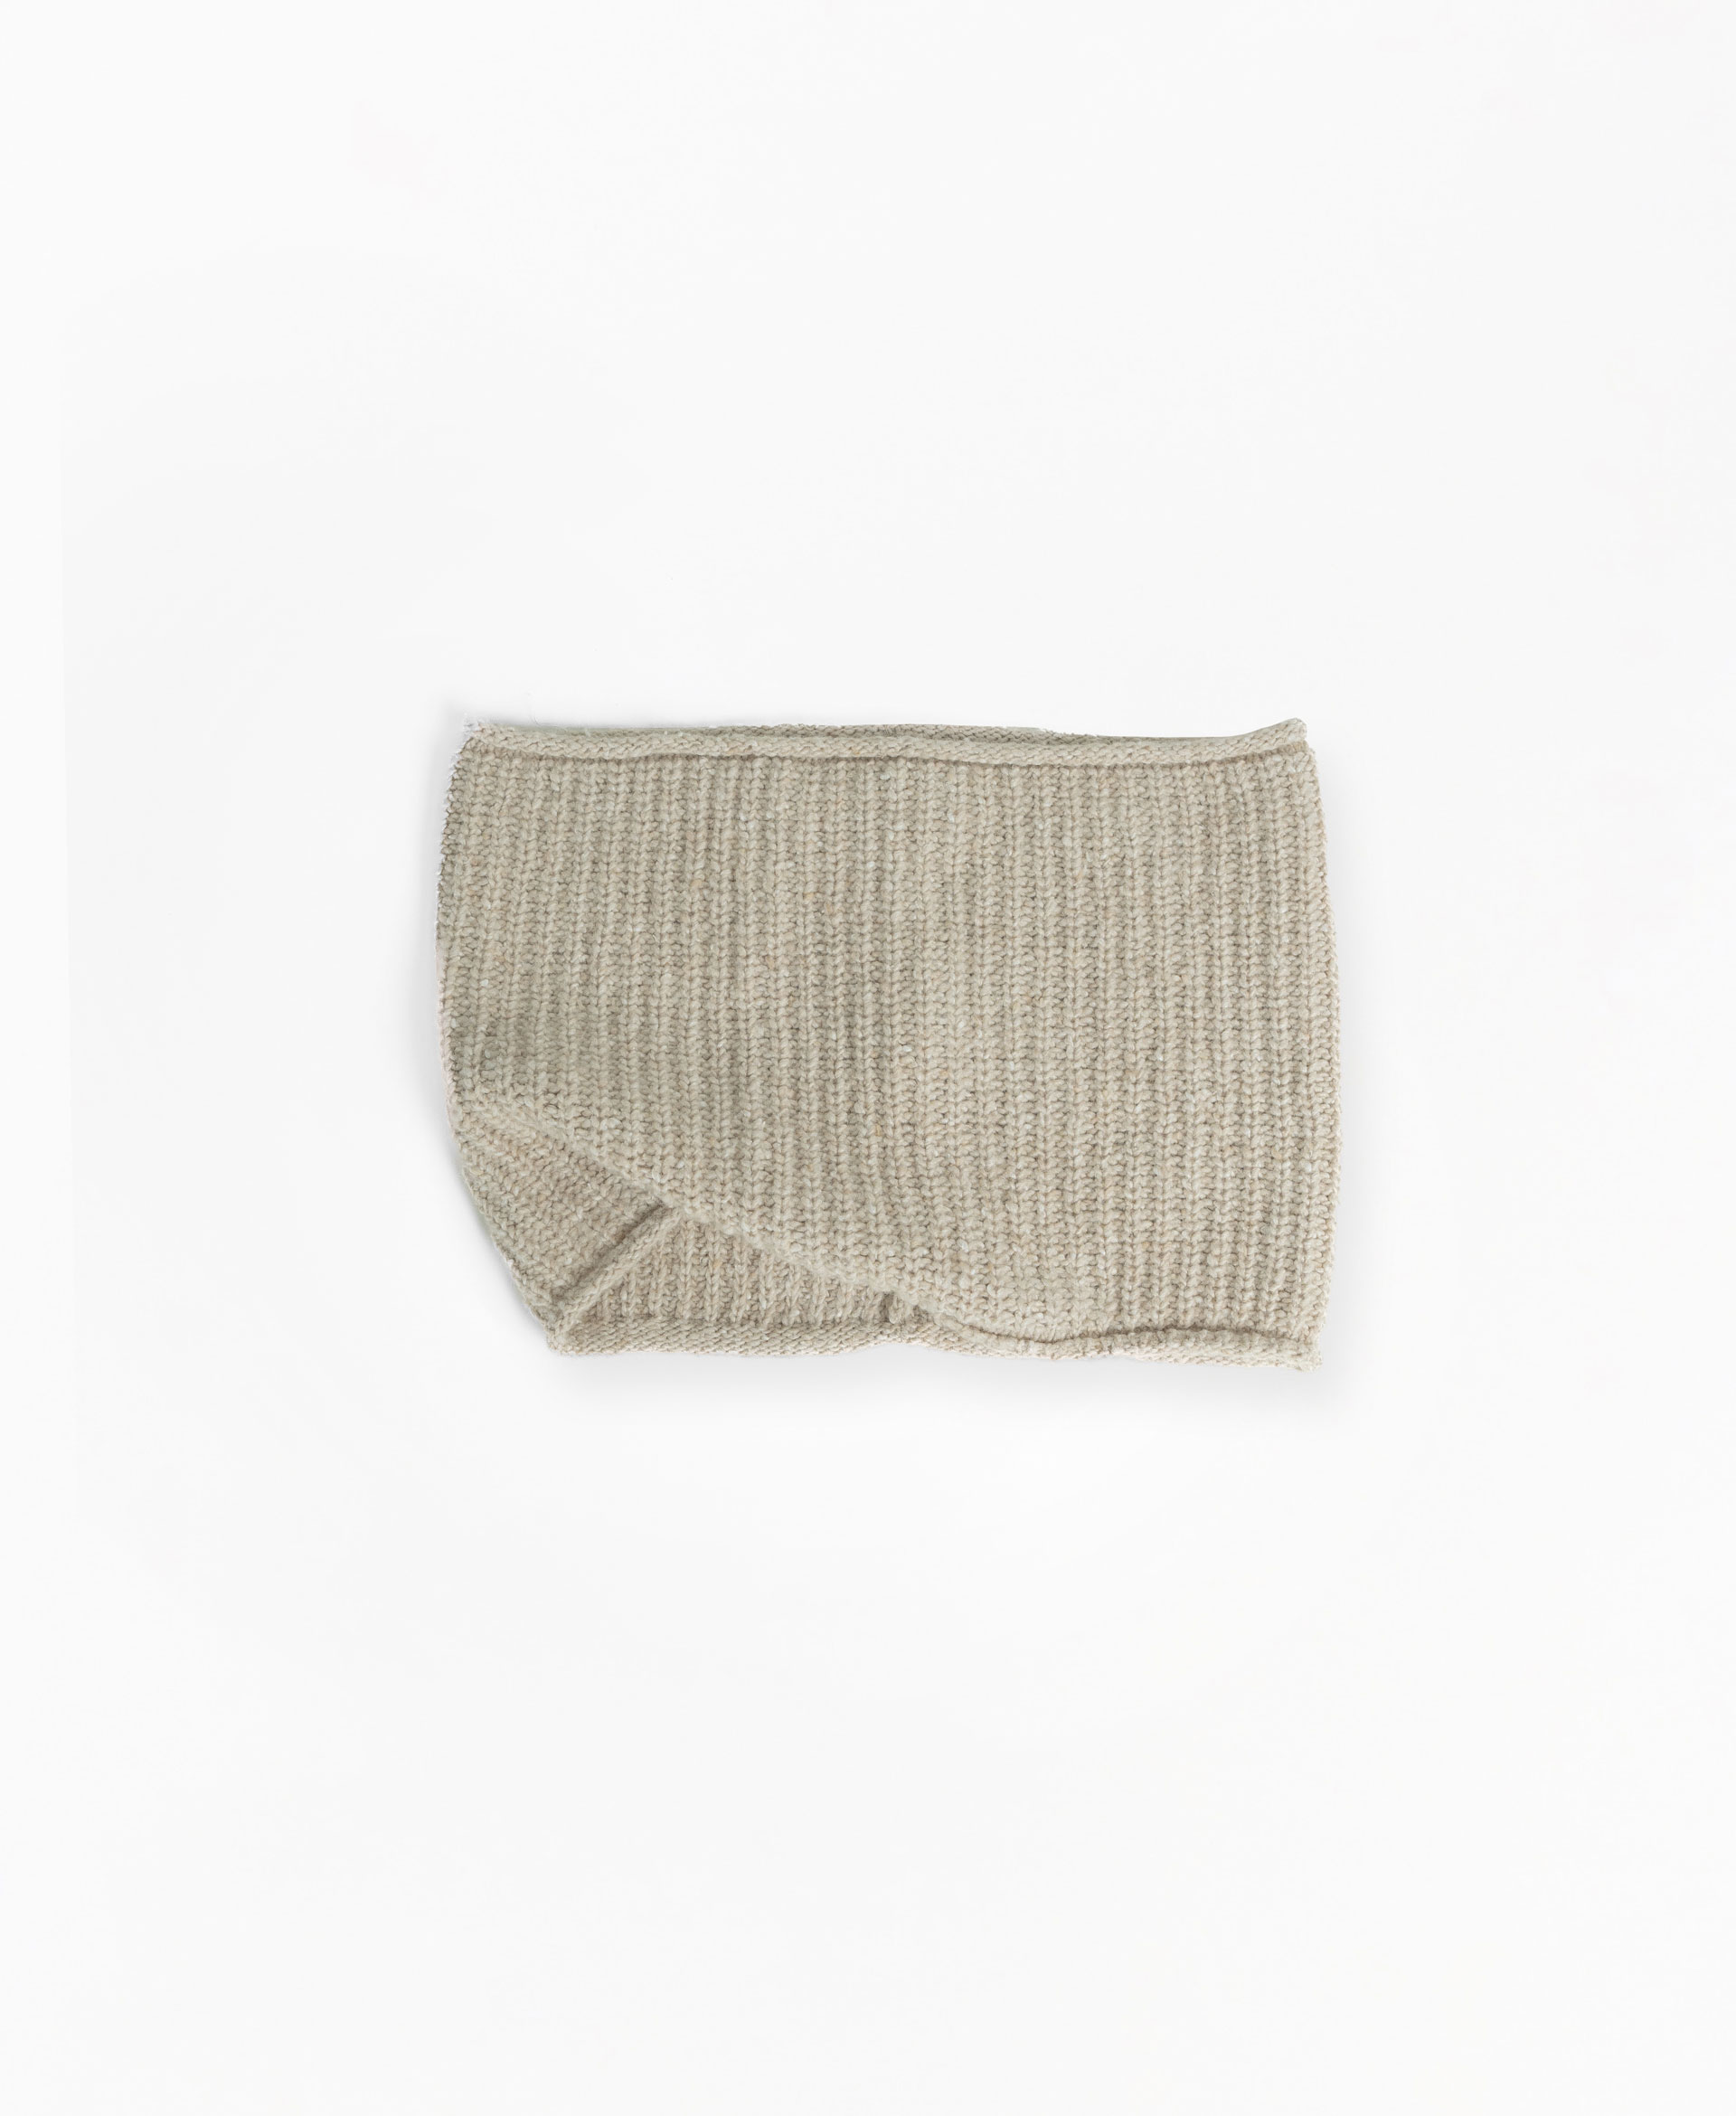 Gola de malha tricot | Mother Lcia